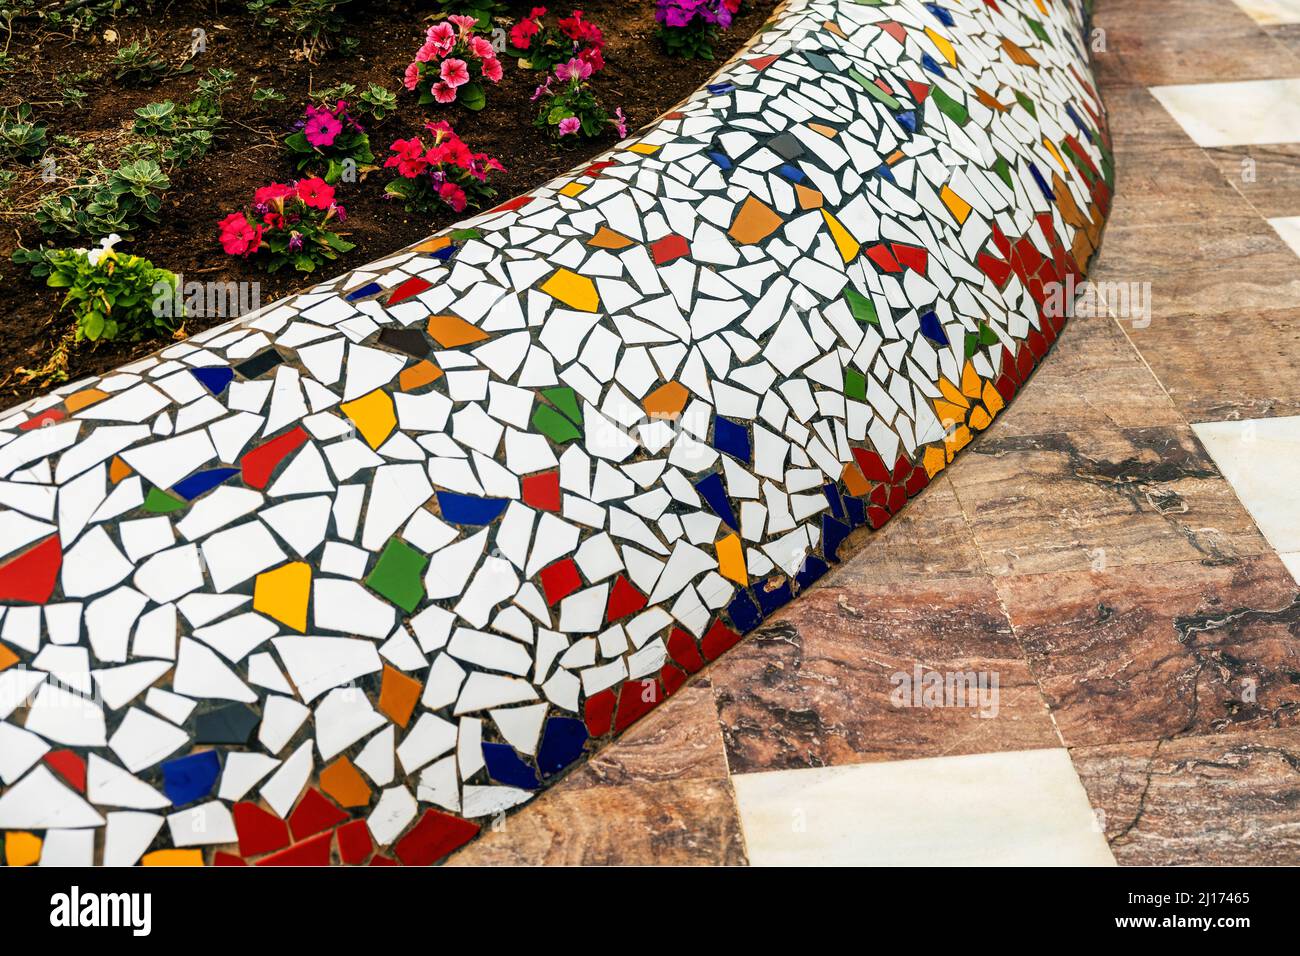 Mosaicos de azulejos rotos fotografías e imágenes de alta resolución - Alamy